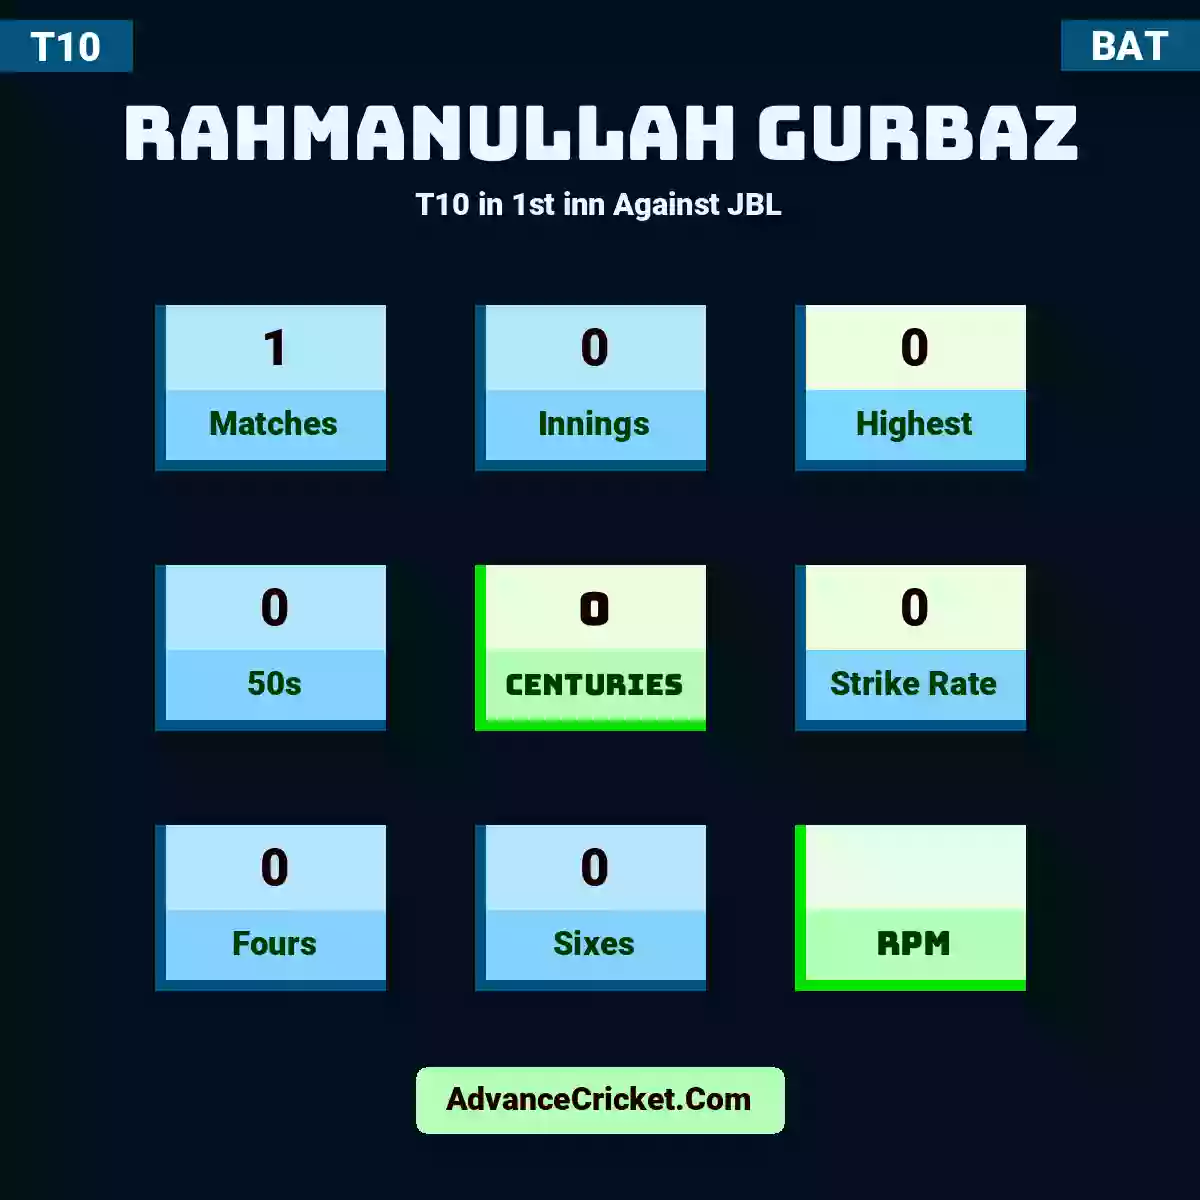 Rahmanullah Gurbaz T10  in 1st inn Against JBL, Rahmanullah Gurbaz played 1 matches, scored 0 runs as highest, 0 half-centuries, and 0 centuries, with a strike rate of 0. R.Gurbaz hit 0 fours and 0 sixes.